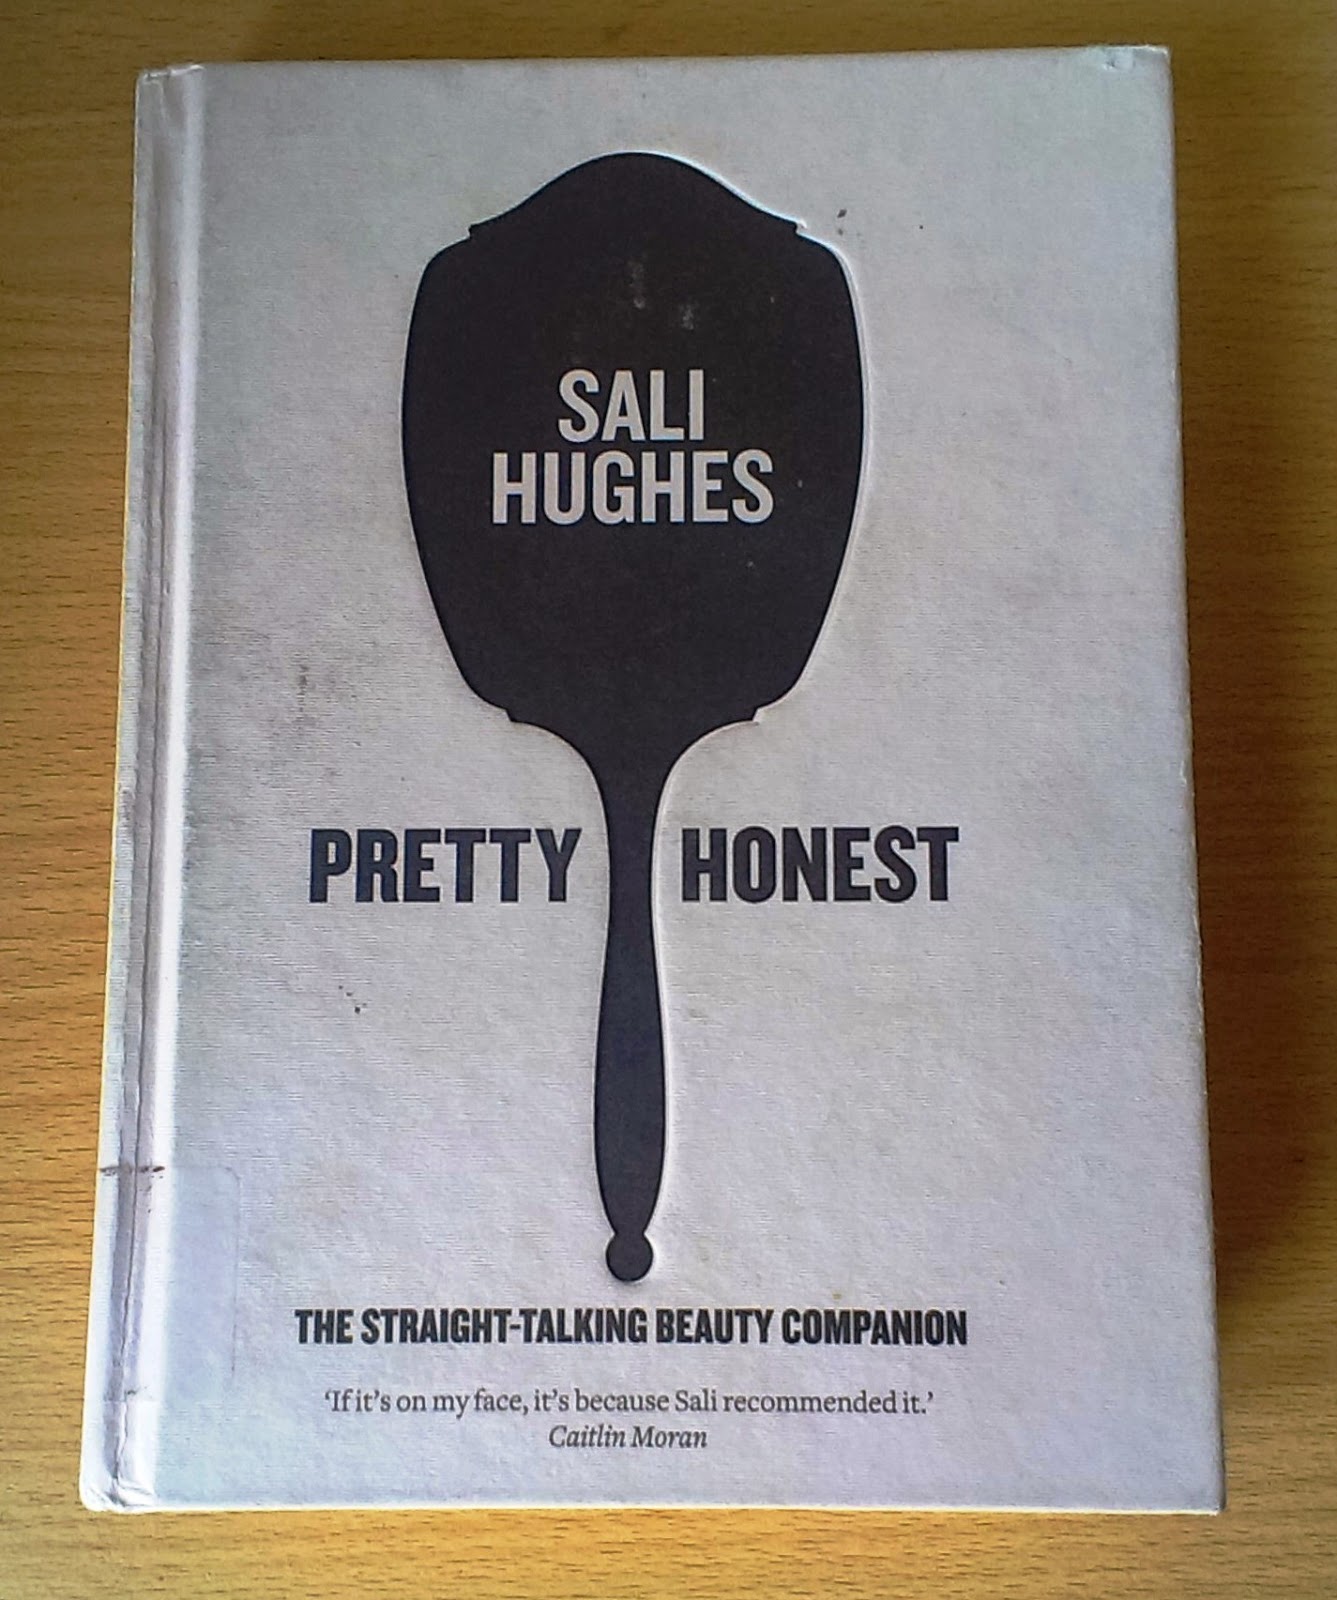 Pretty Honest by Sali Hughes